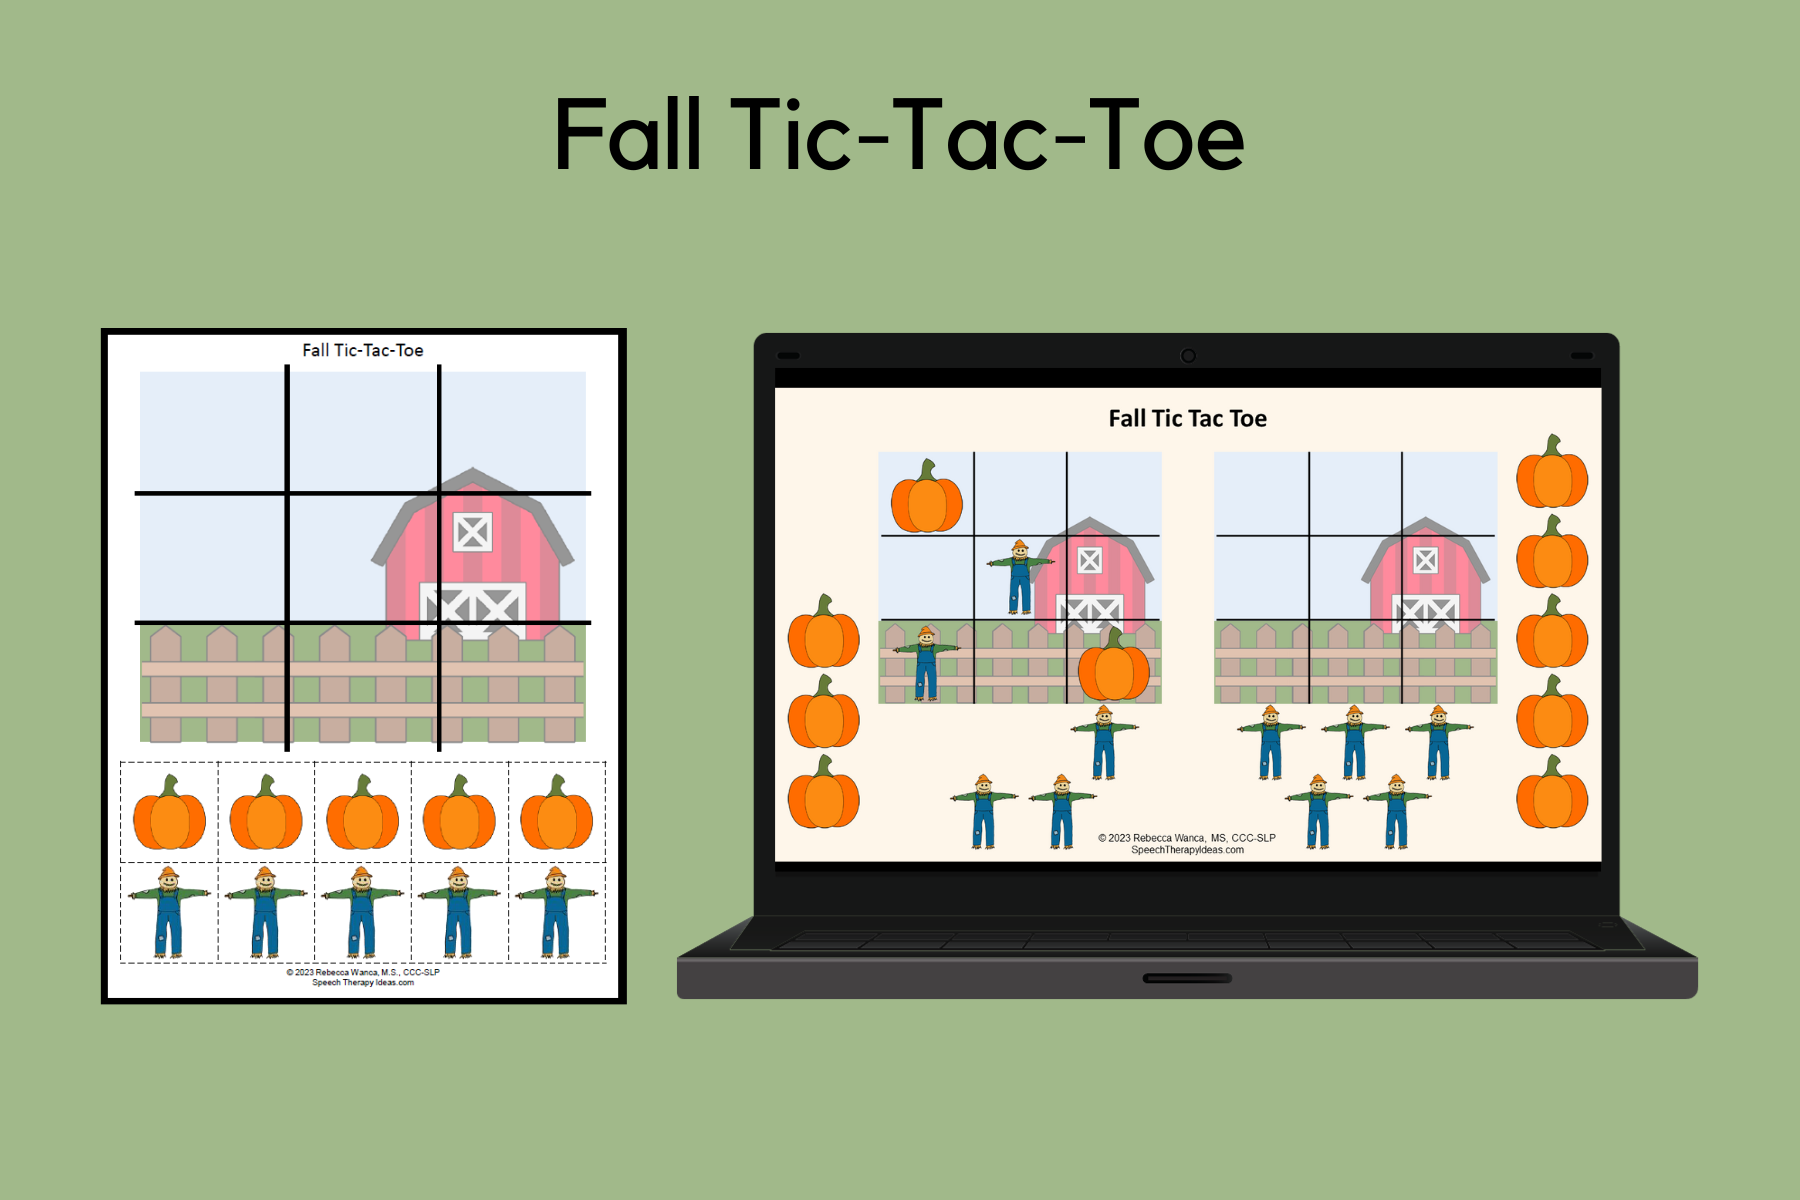 Fall Tic-Tac-Toe Reinforcement Activity